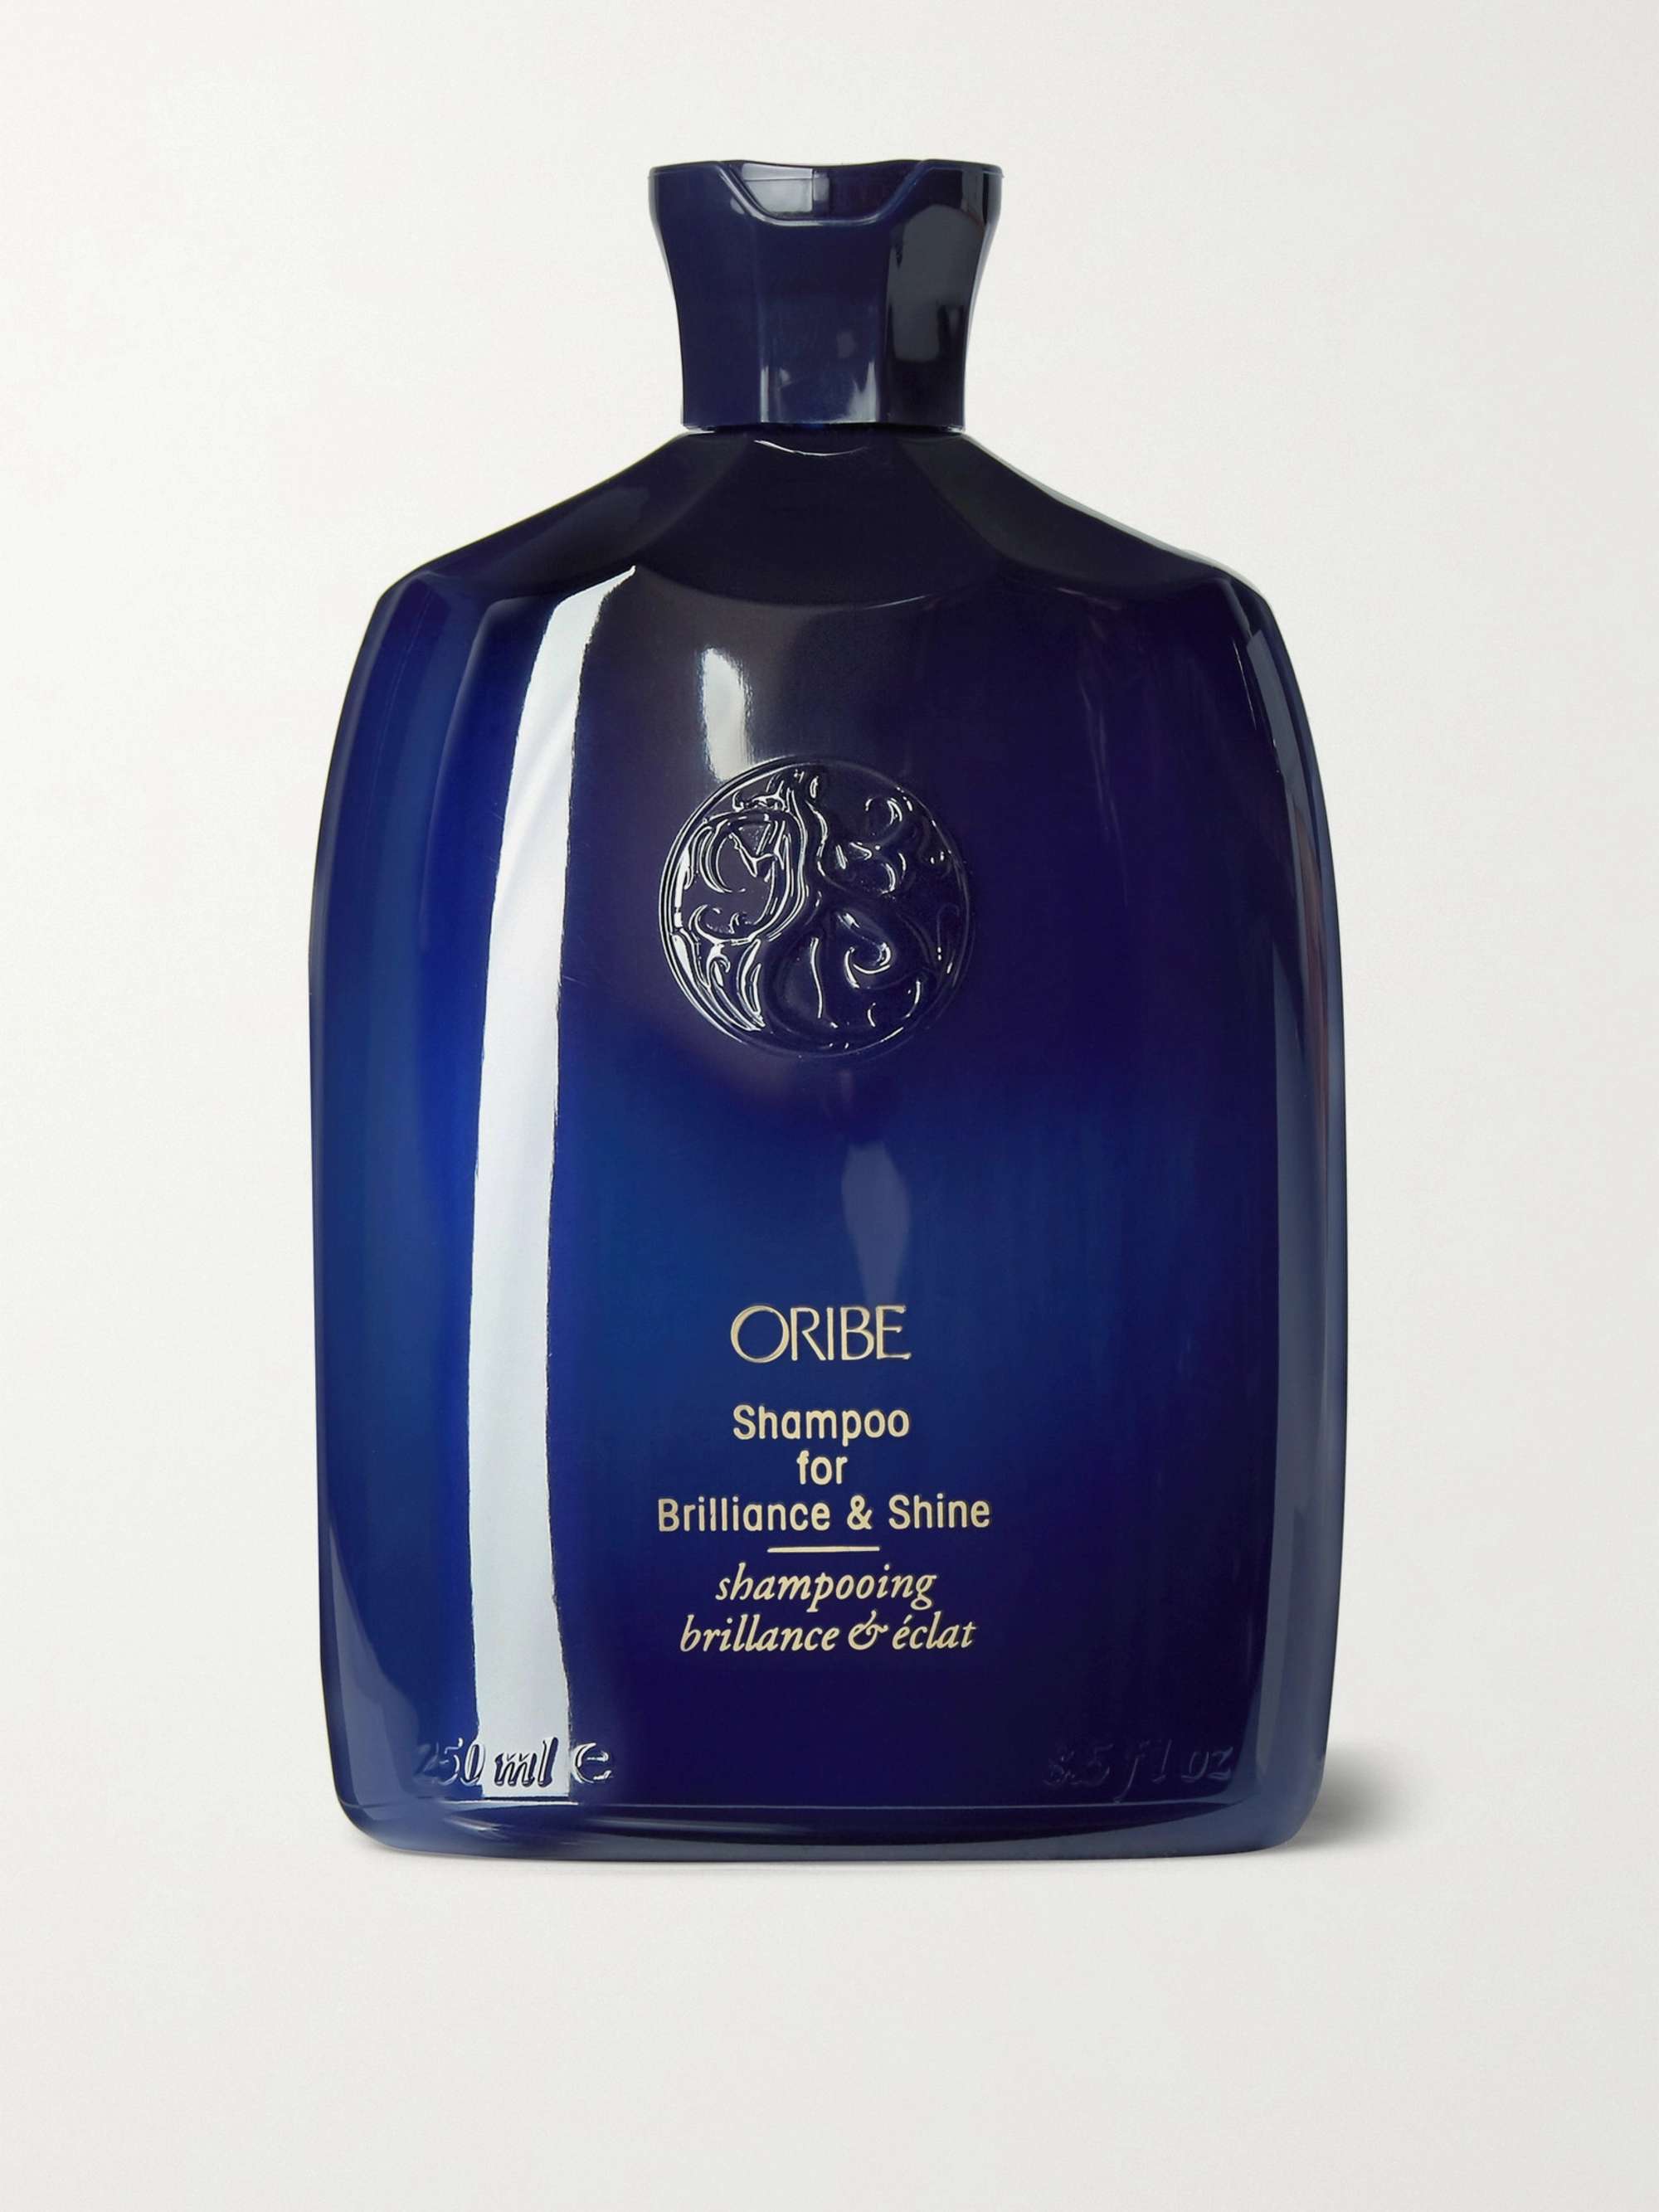 ORIBE Shampoo for Brilliance & Shine, 250ml